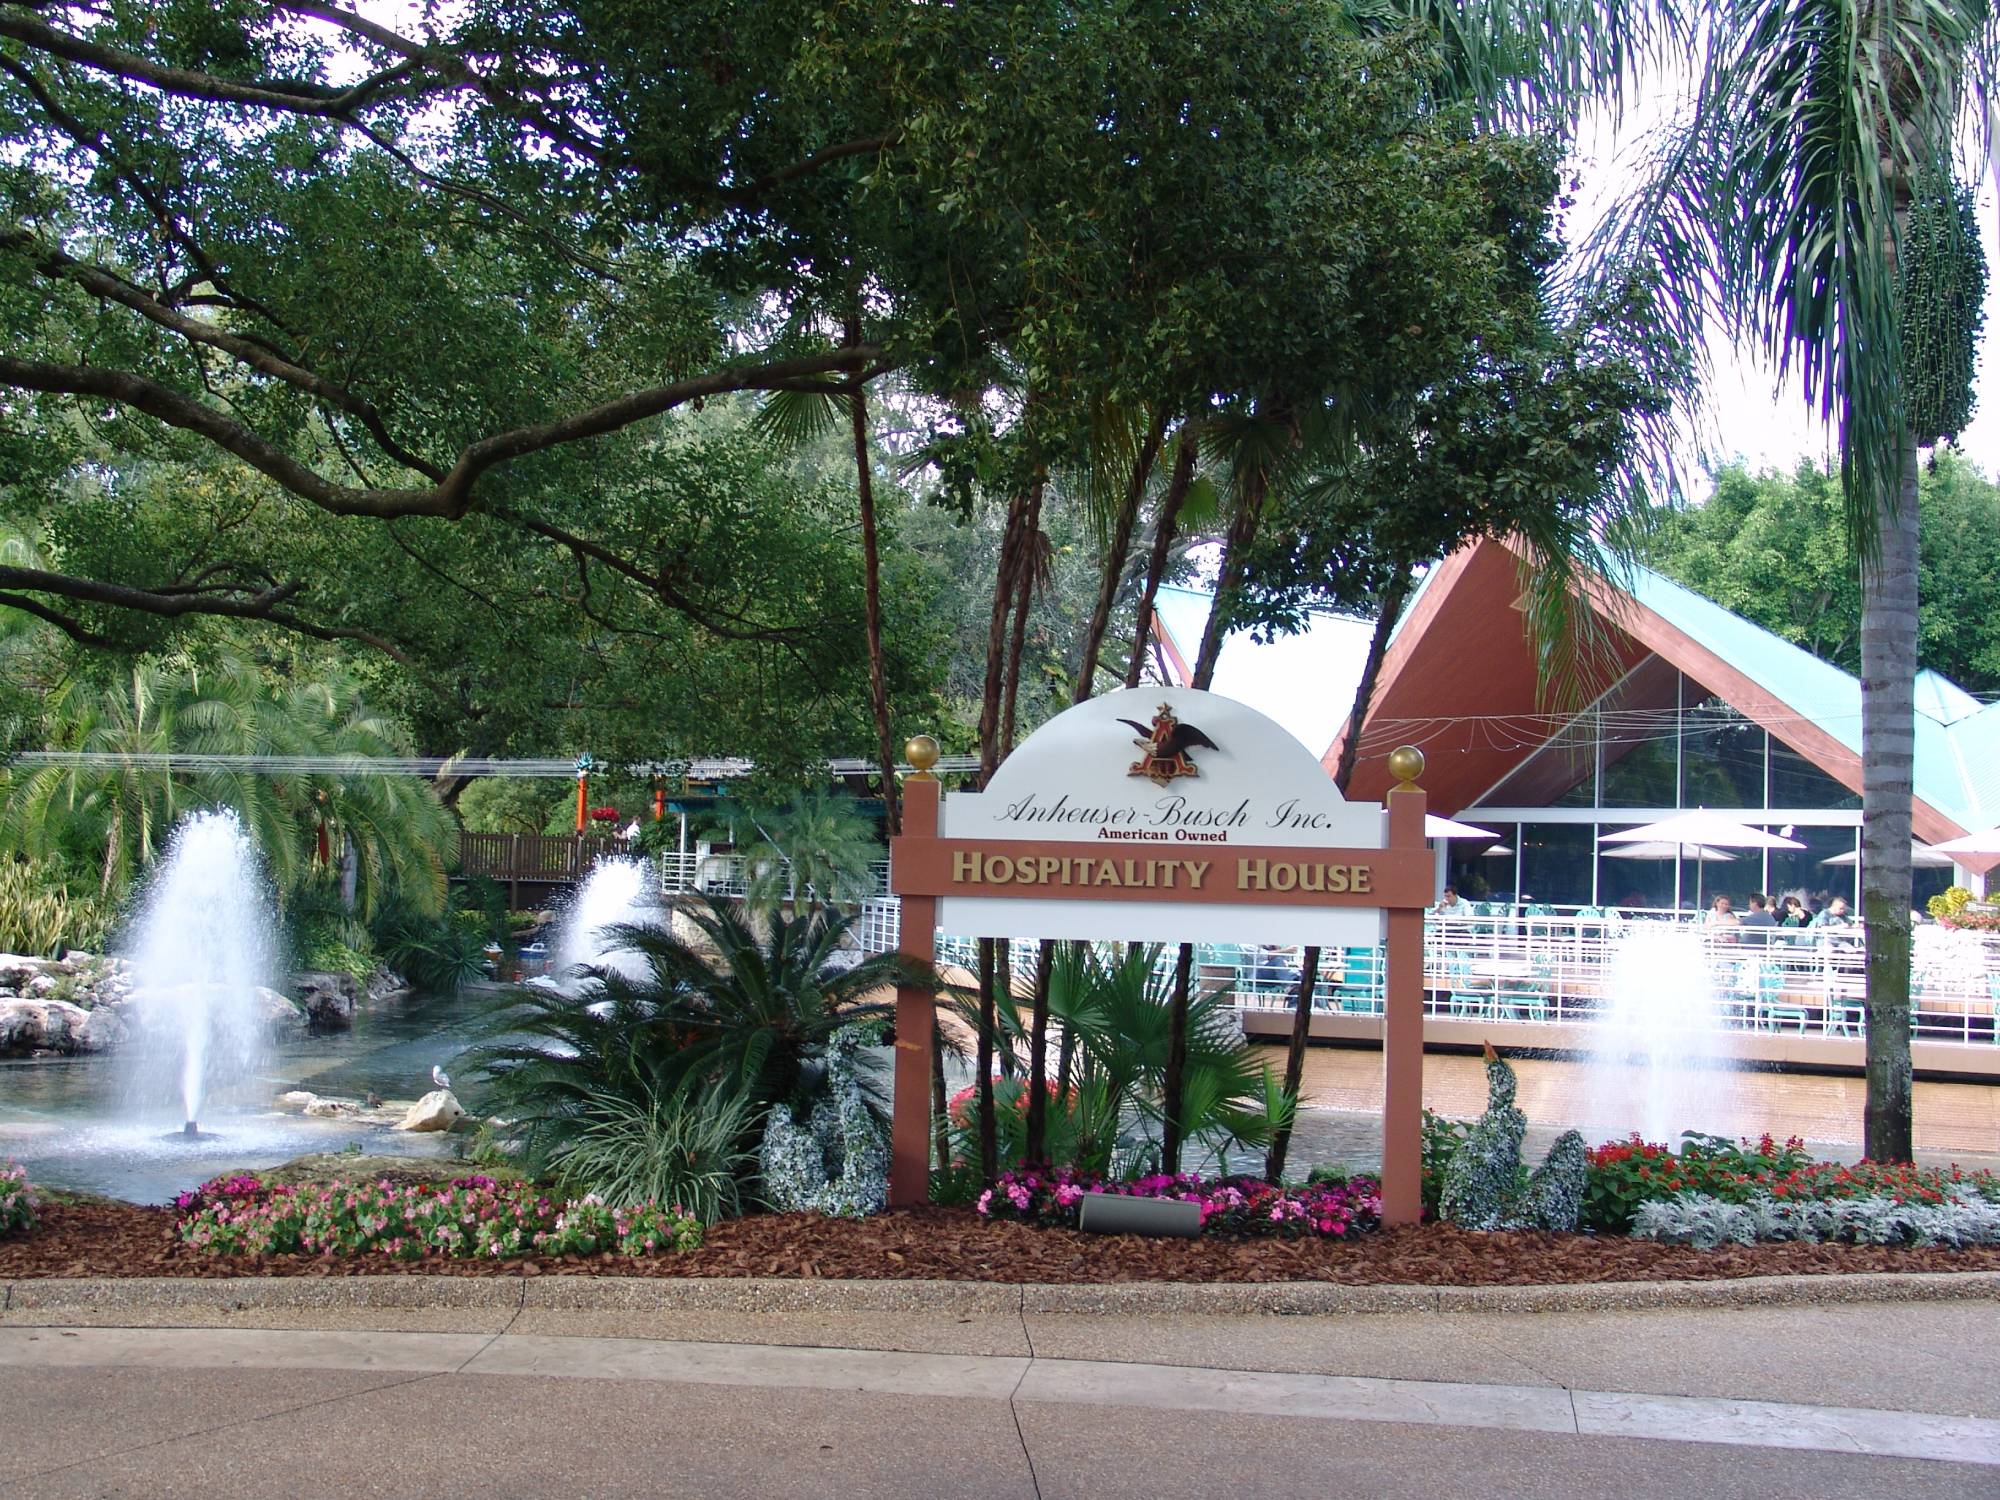 Busch Gardens Tampa - Anheuser-Busch Hospitality House